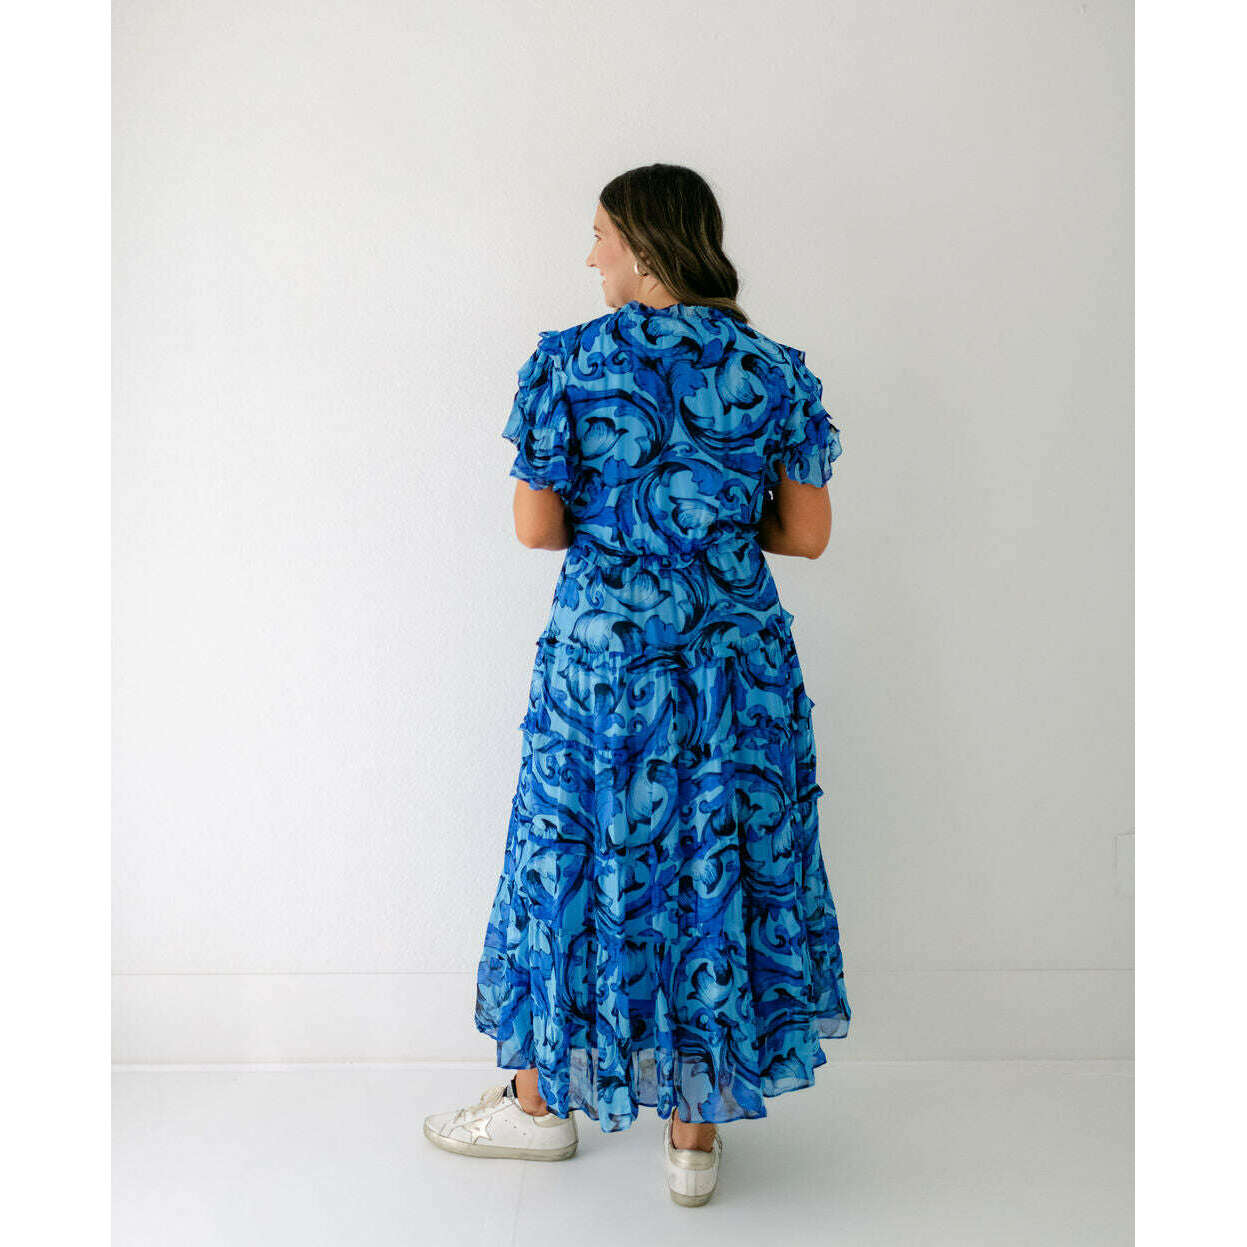 8.28 Boutique:Maude Vivante,Maude Vivante Stella Print Dress in Blue,Dress